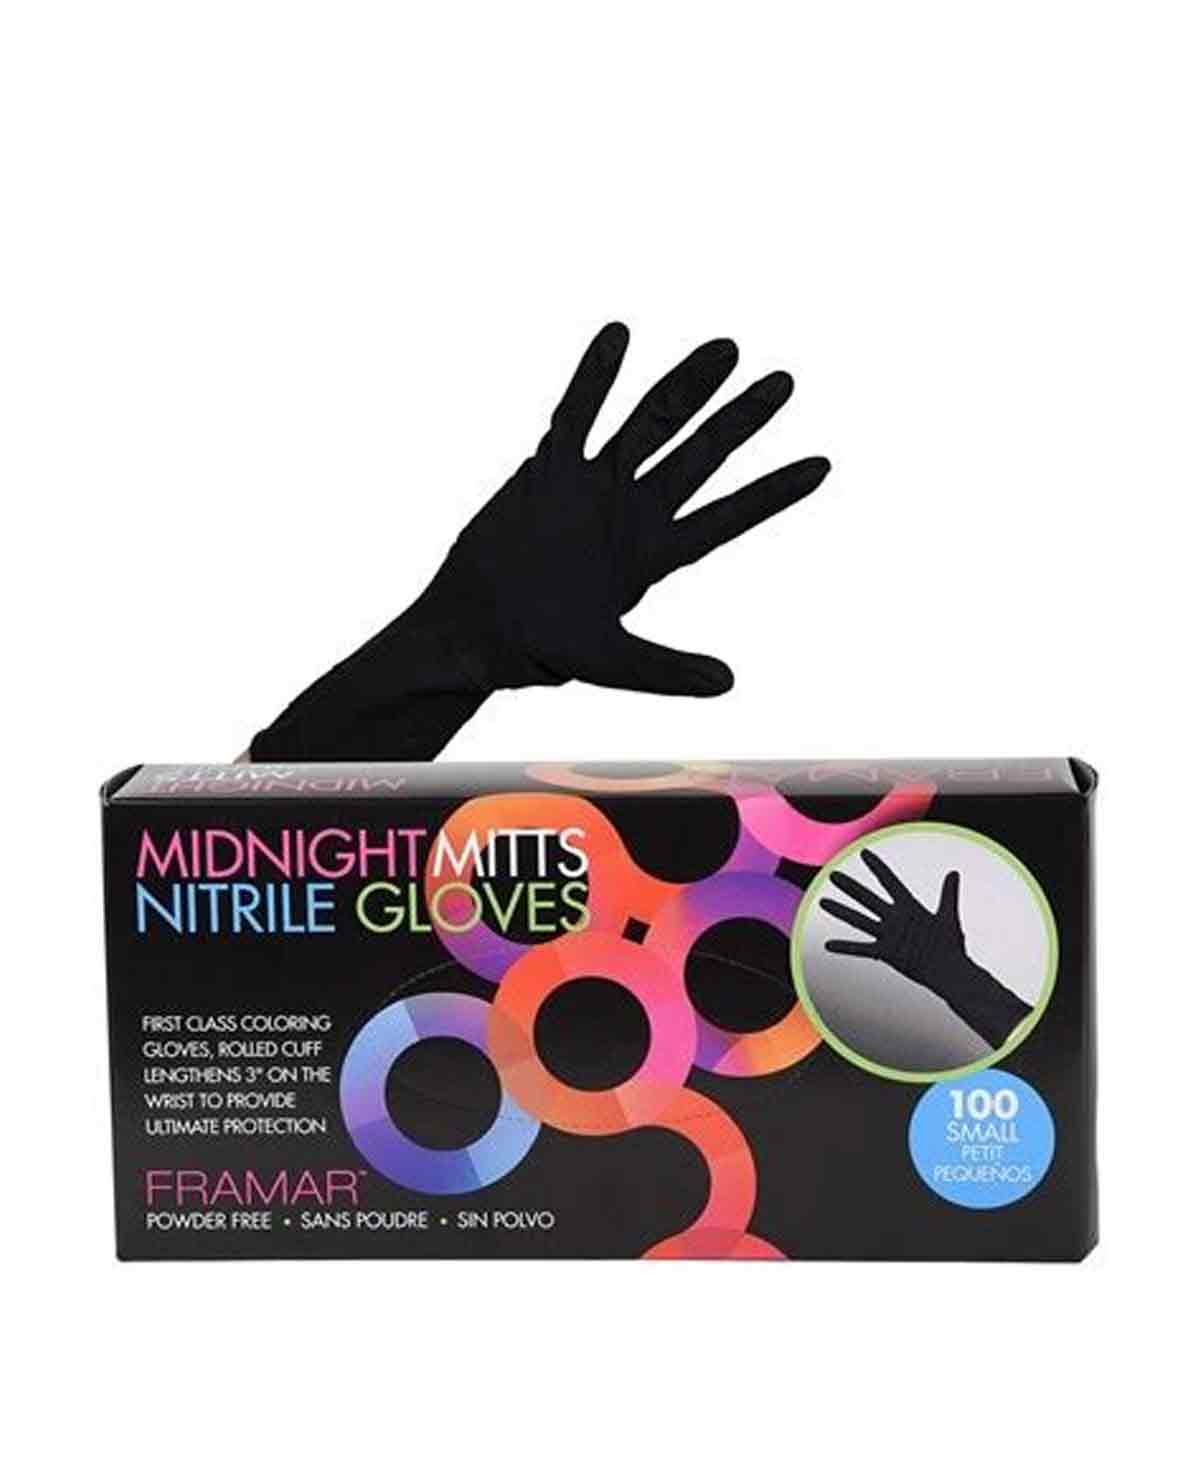 Framar Midnight Mitts Nitrile Gloves - Small